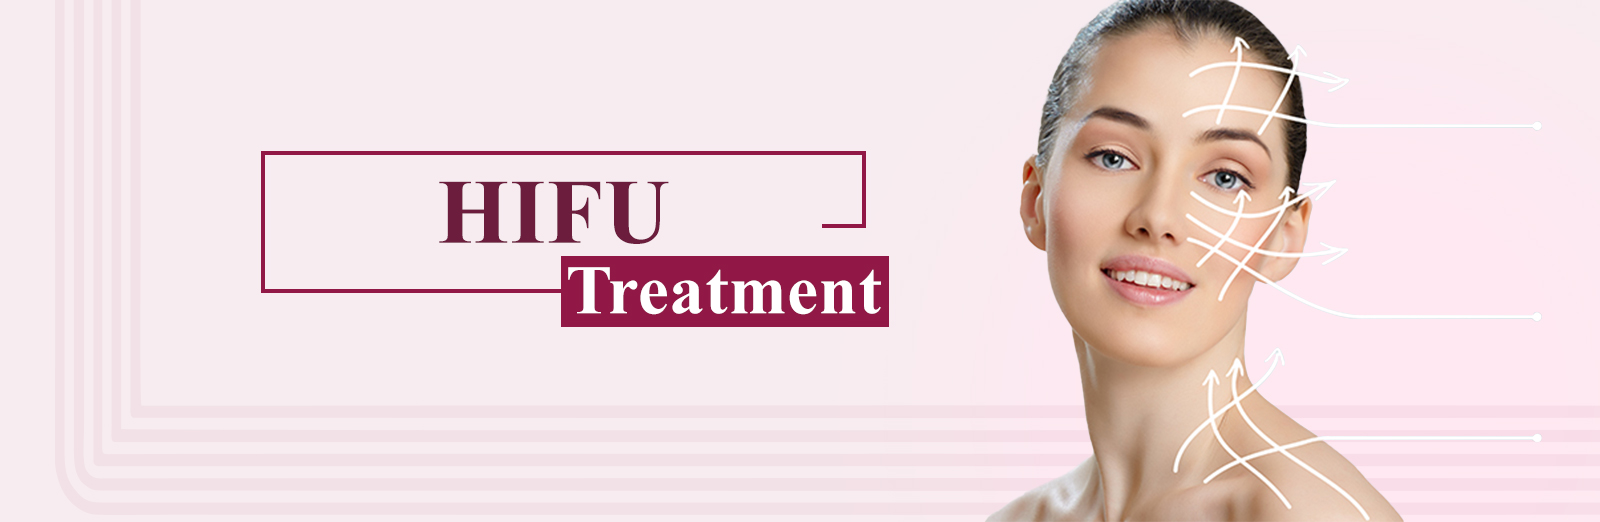 Best HIFU Treatment For Skin in Hyderabad